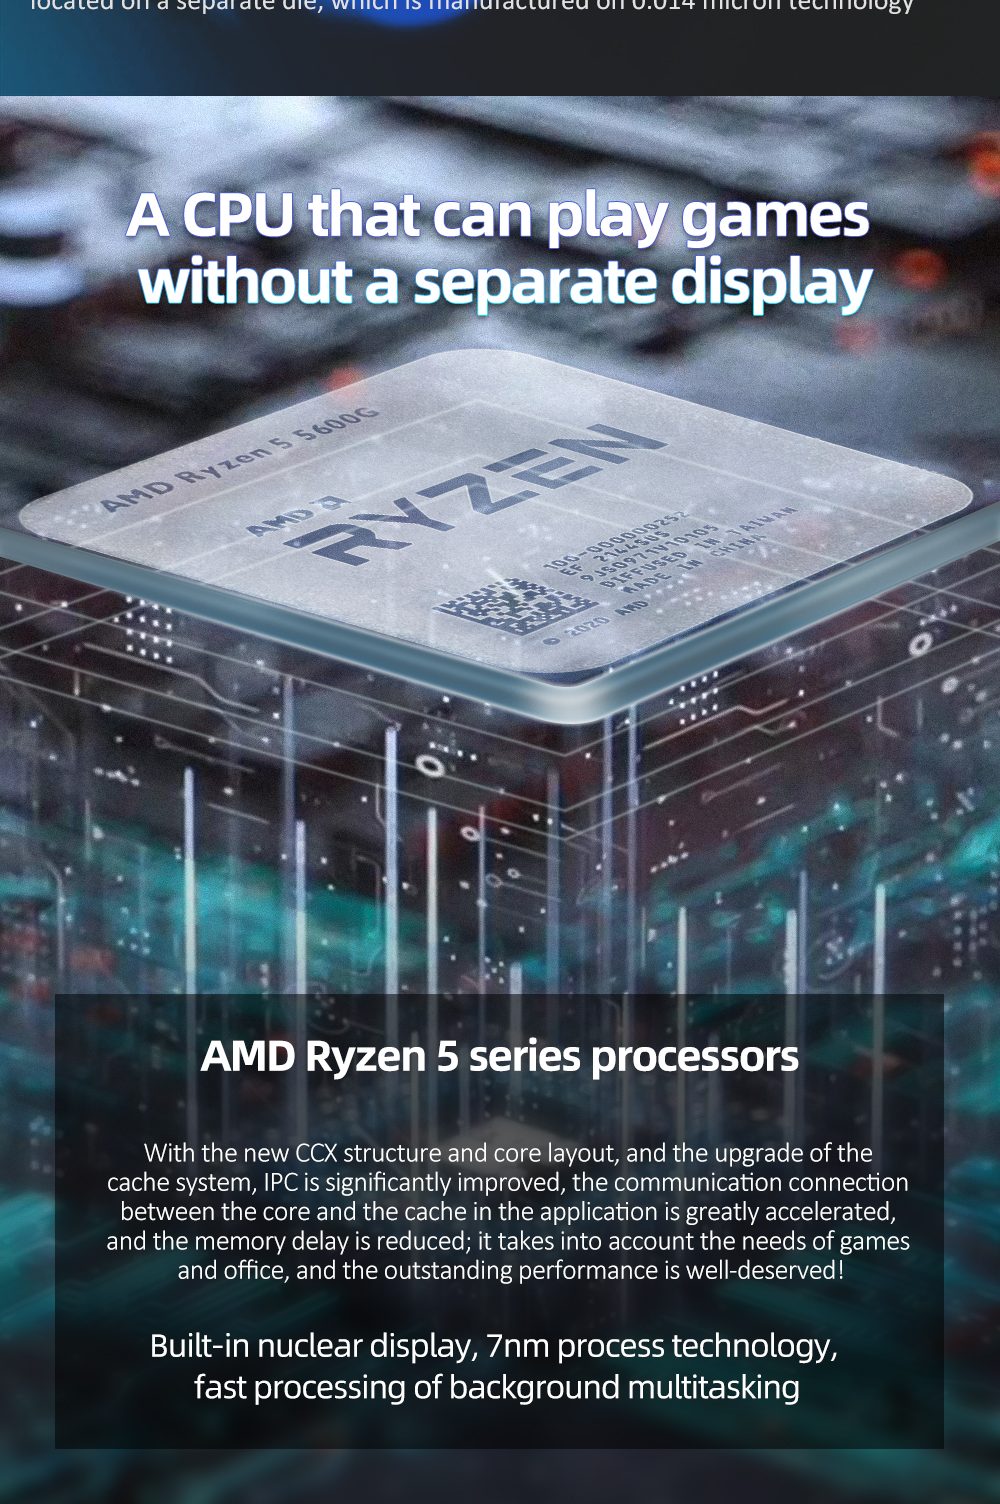 ASUS New TUF GAMING B550M PLUS scheda madre da 128GB + AMD nuova CPU Ryzen 5 5600G 3.9GHz Six-Core + SAMSUNG 870 EVO 250G SSD